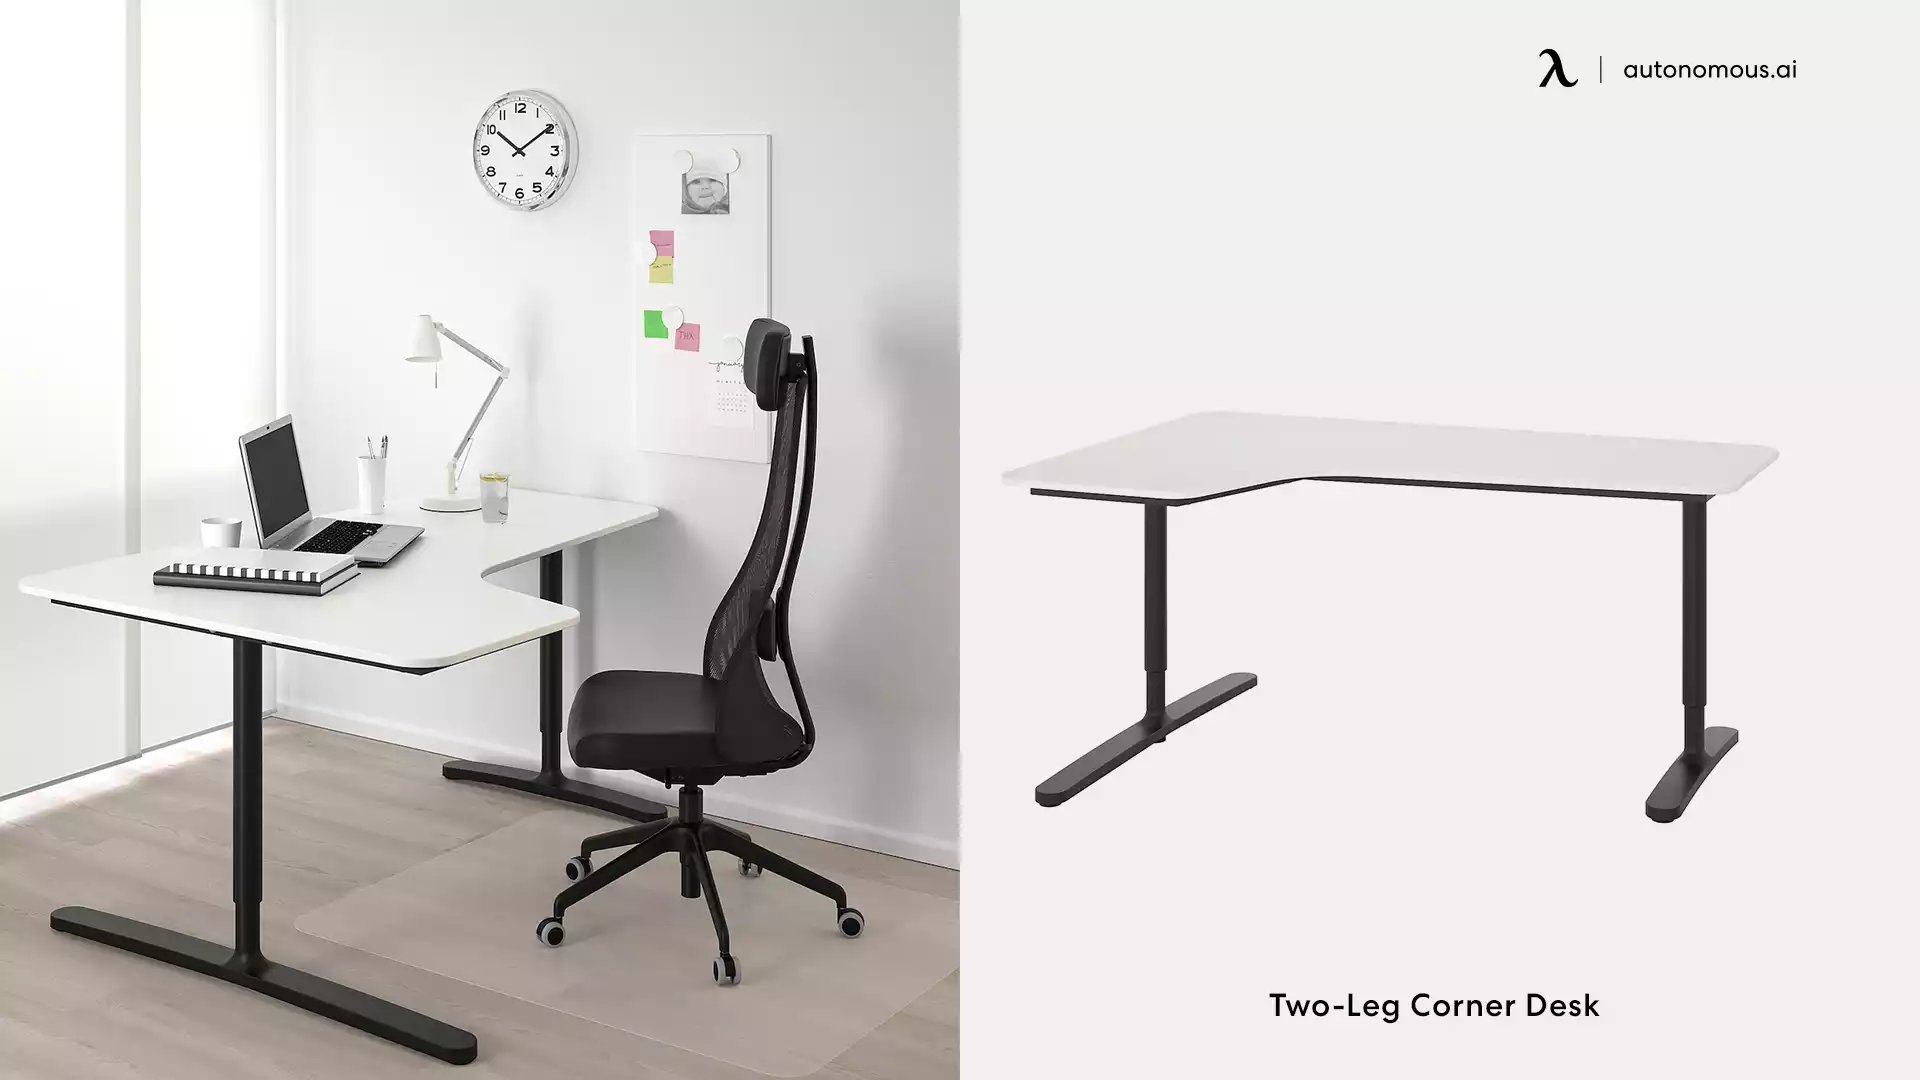 Two-leg corner desk